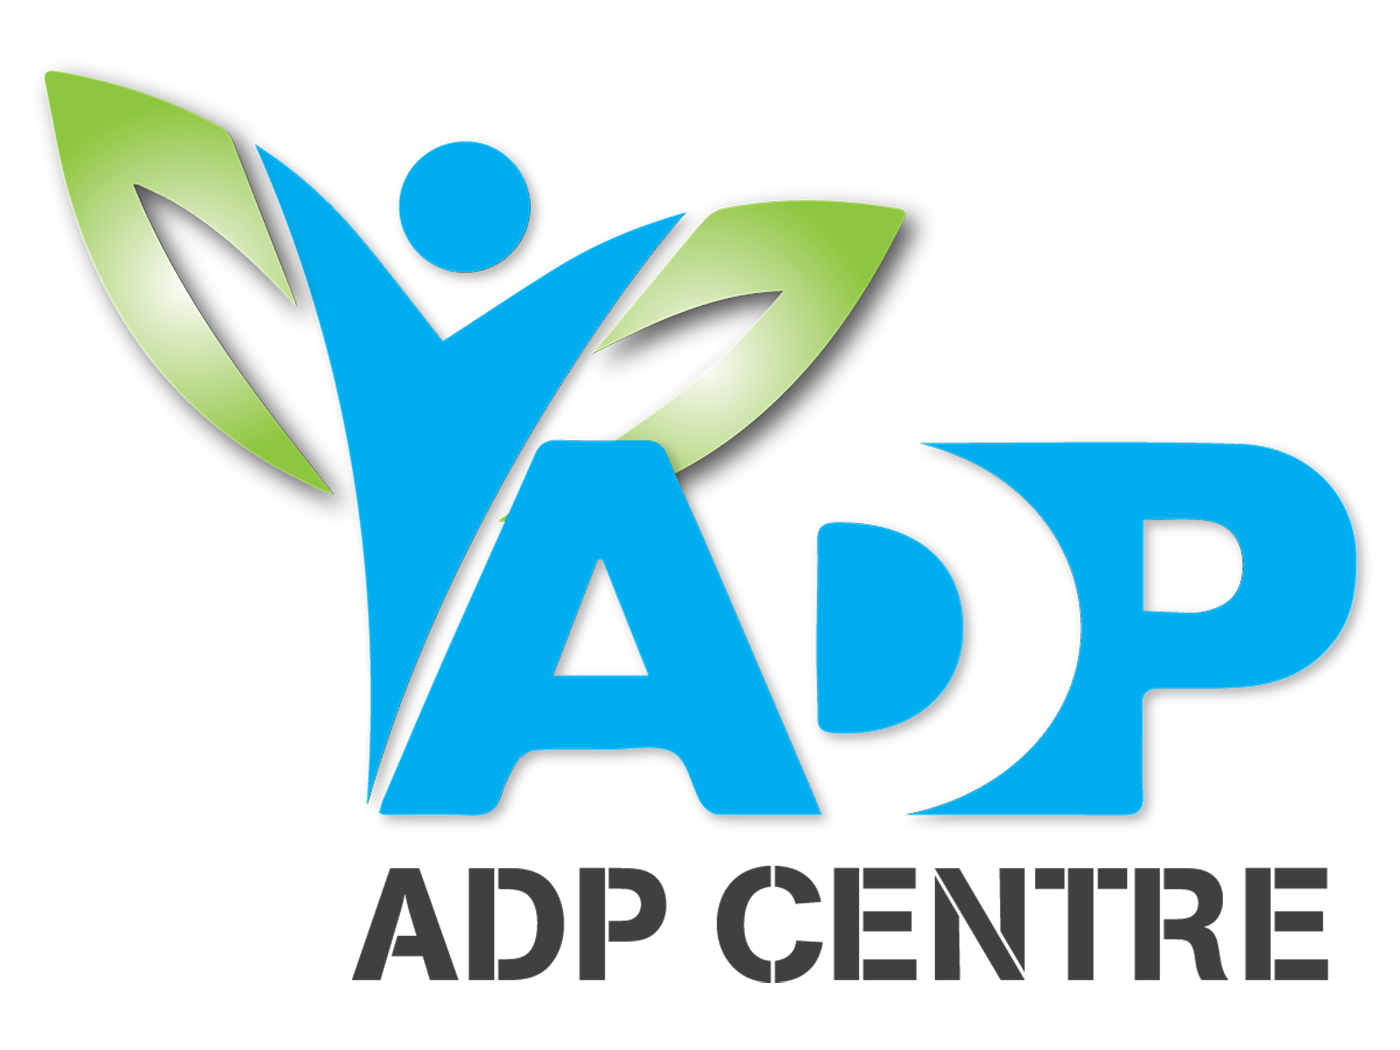 Adp Logo Jpg - Adp logo download free clip art with a transparent ...